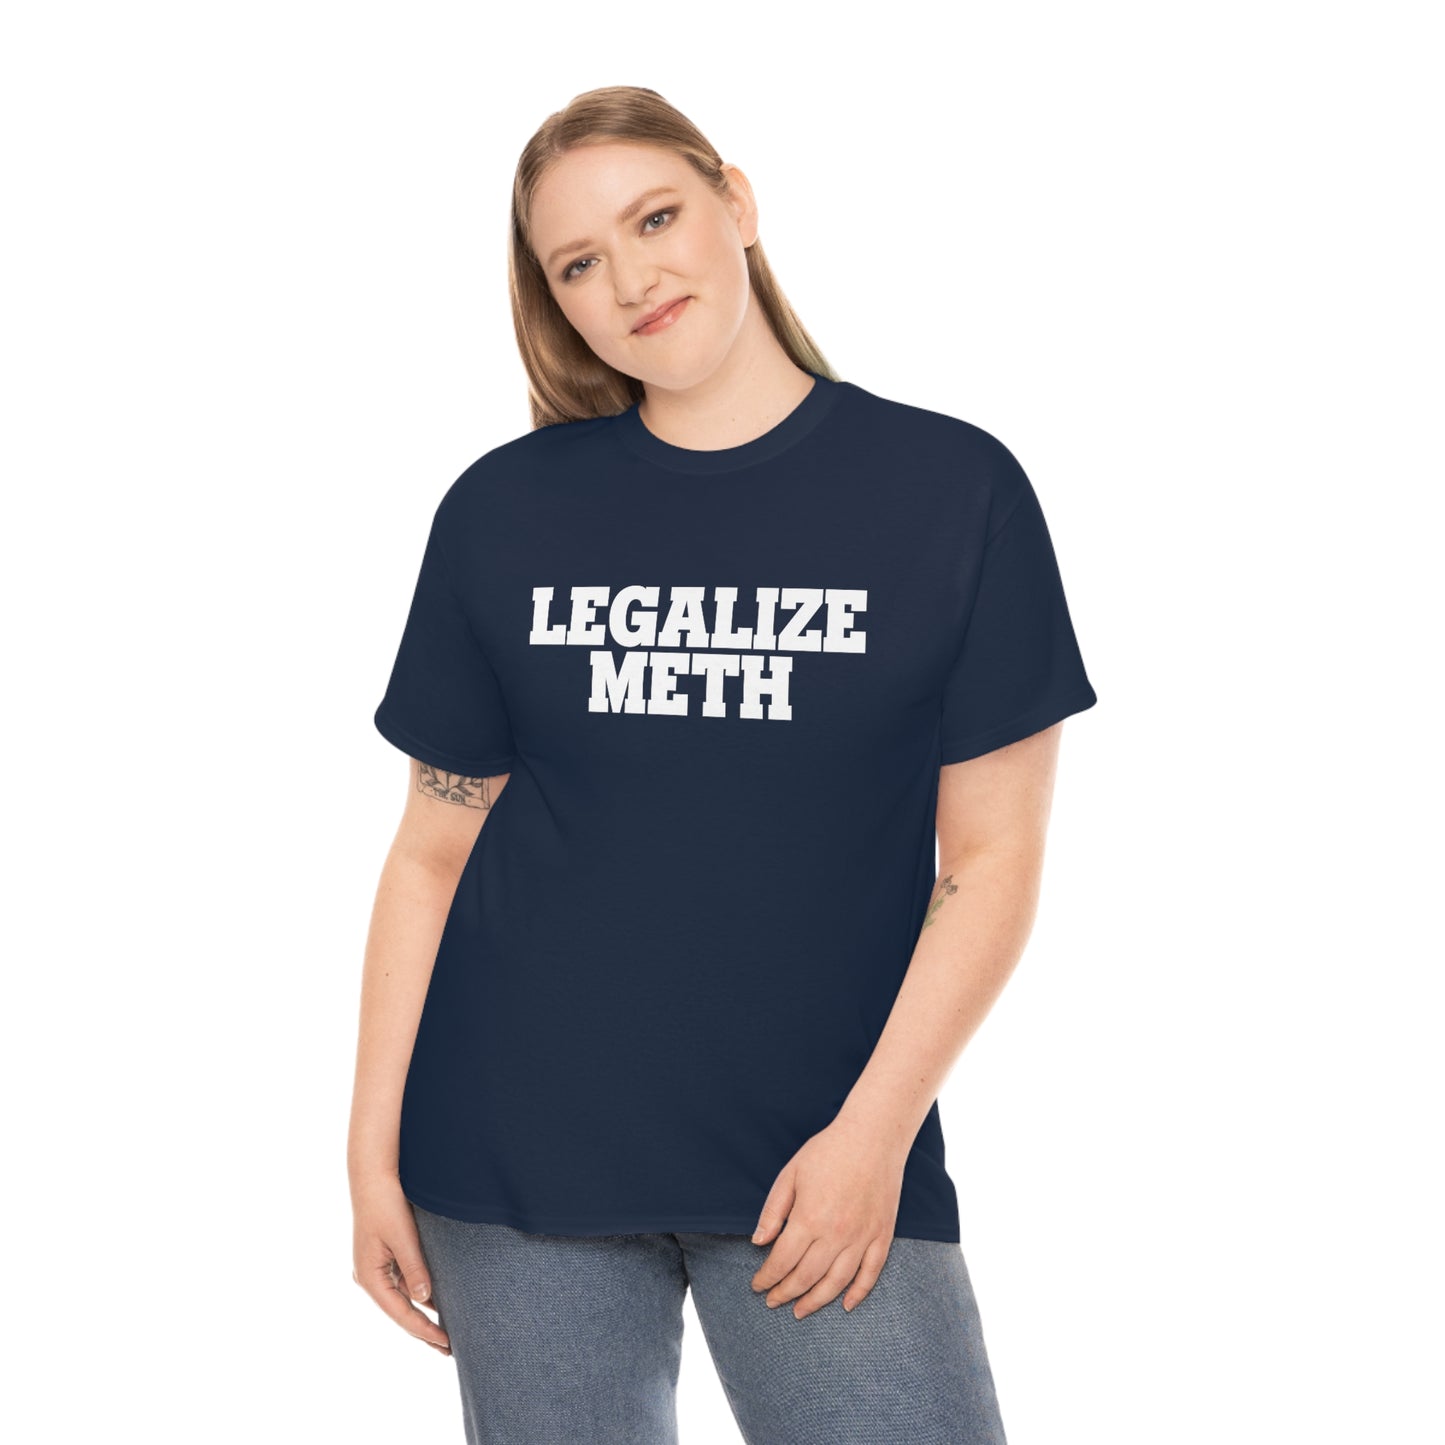 LEGALIZE METH T-SHIRT